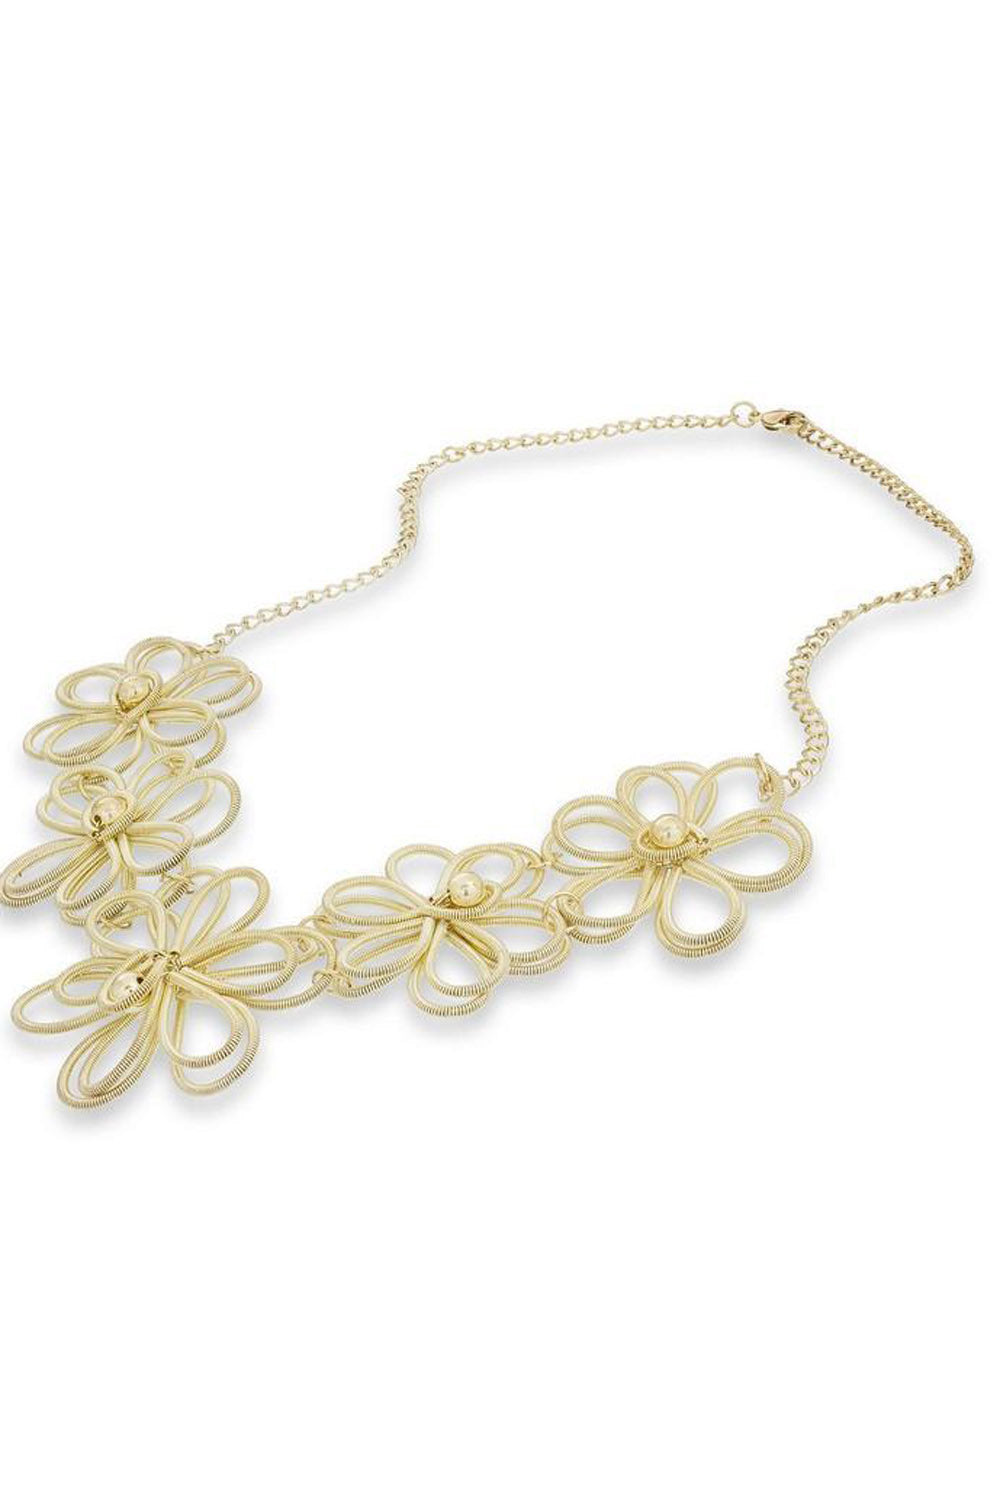   Buy Women's Alloy Necklace in Gold Online